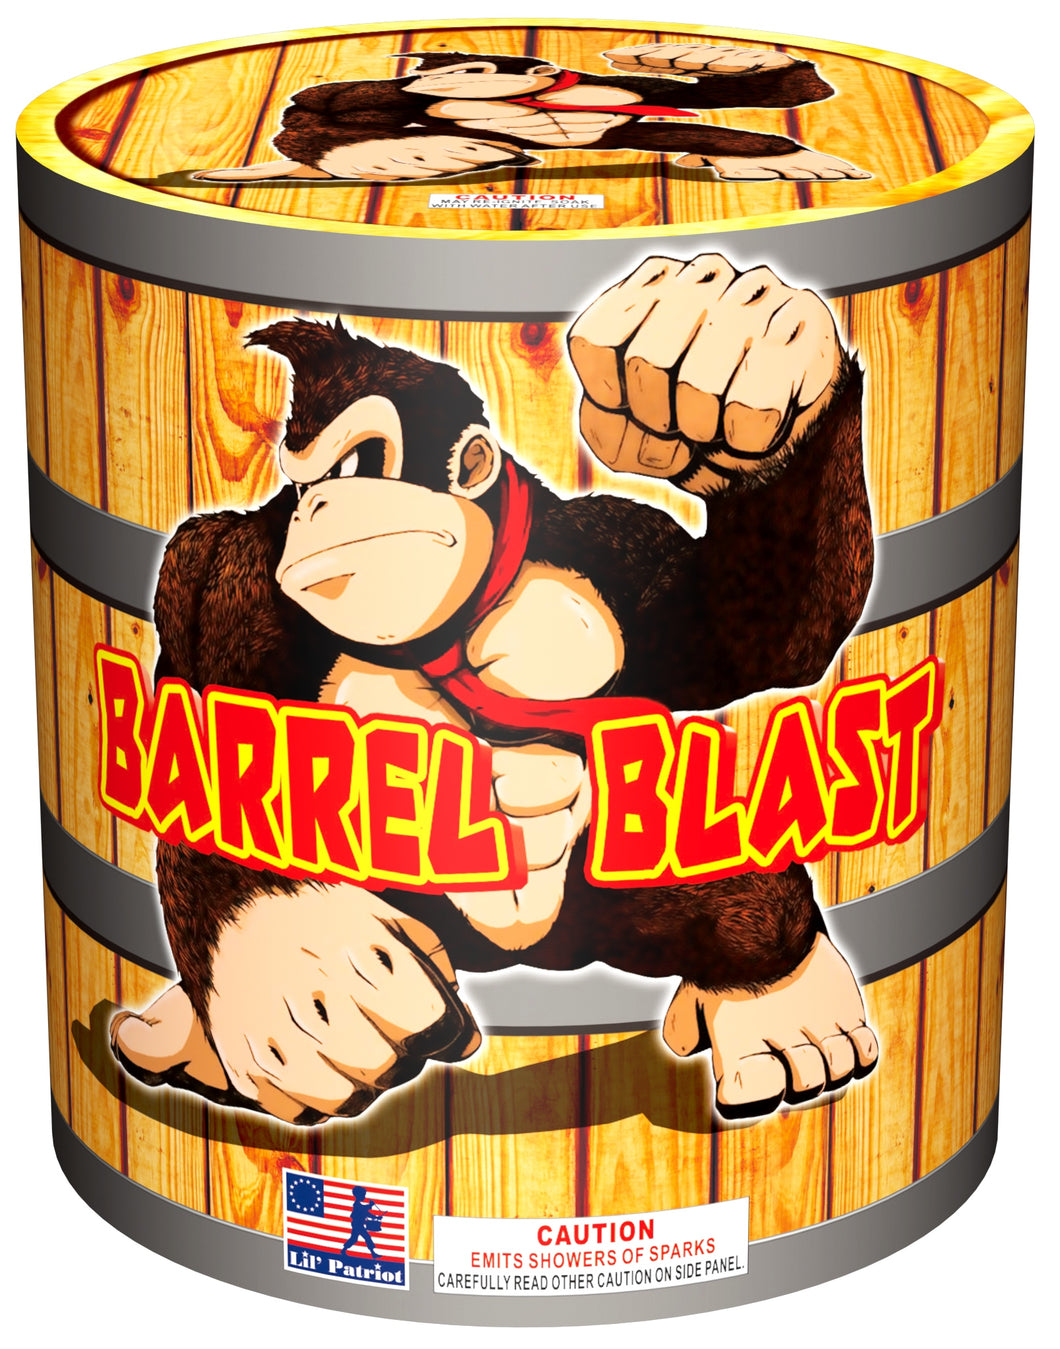 Barrel Blast